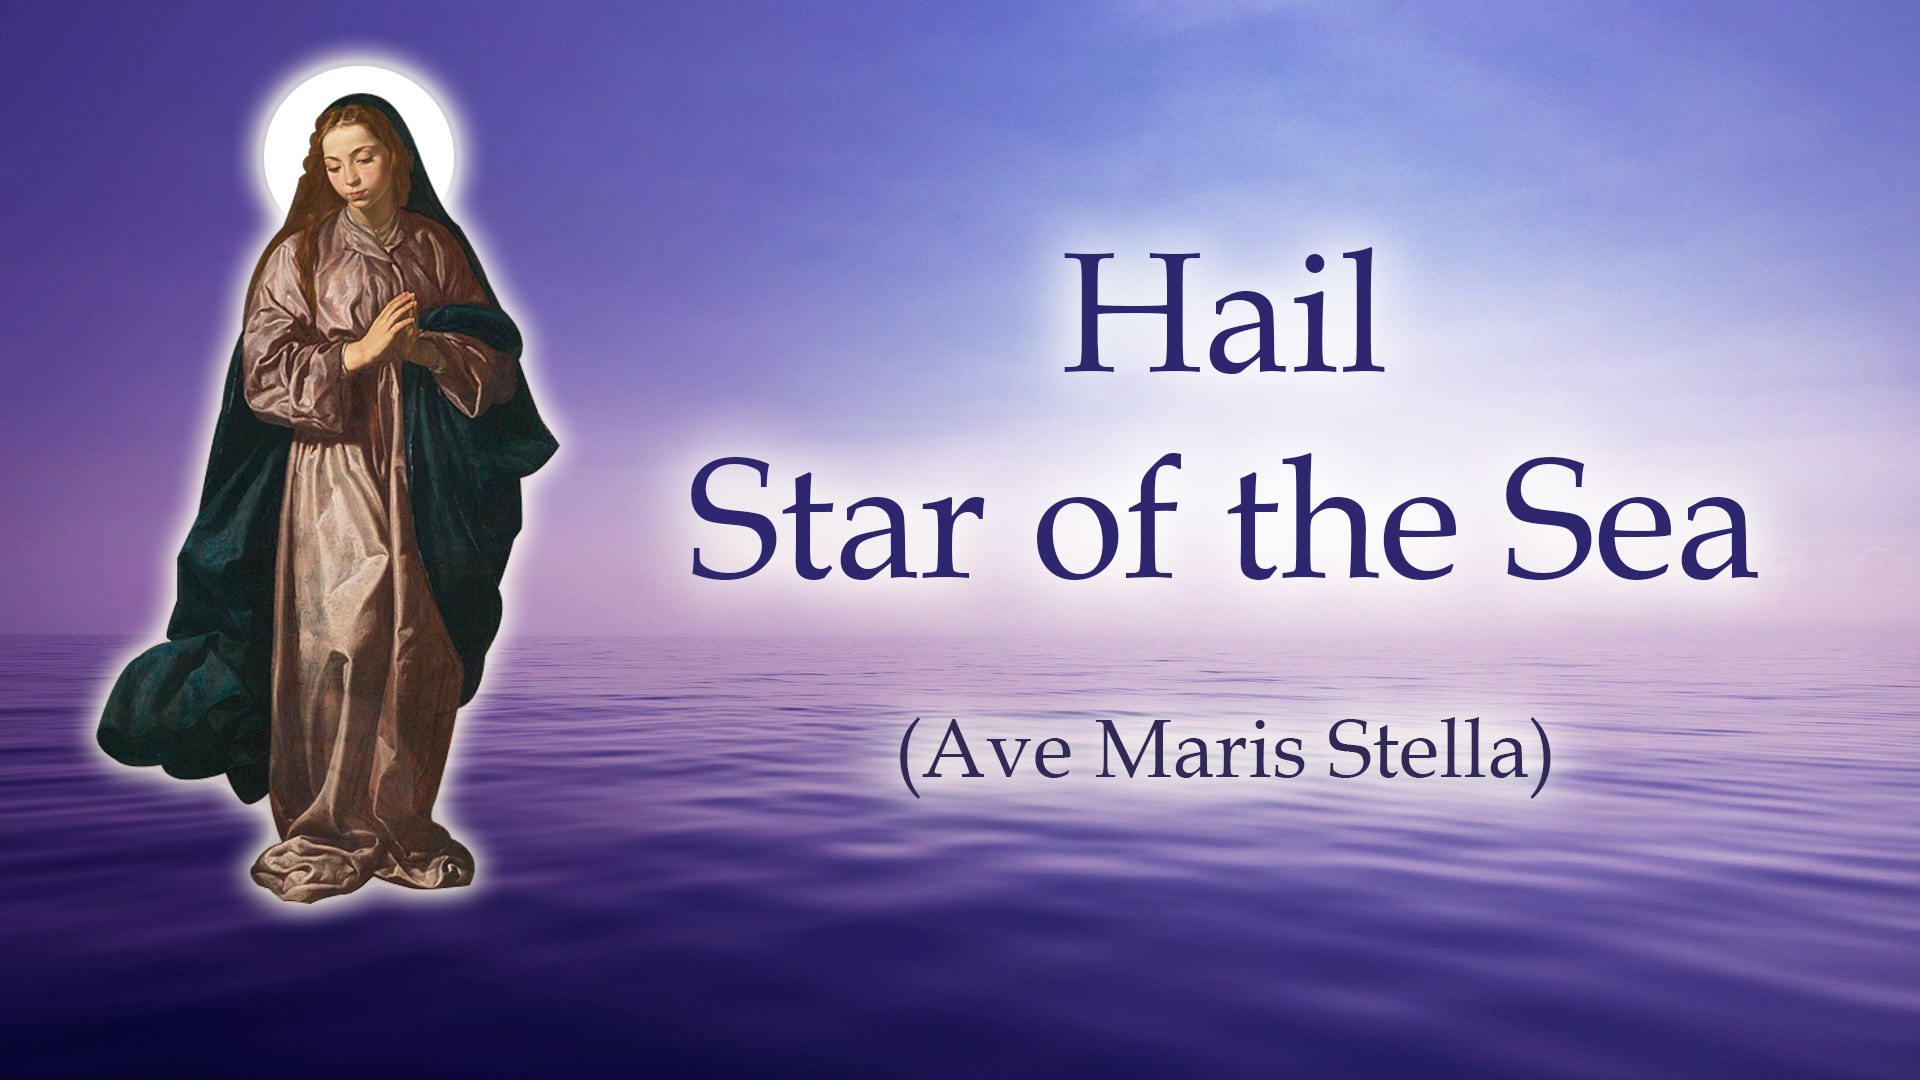 Hail Star of the Sea (Ave Maris Stella)